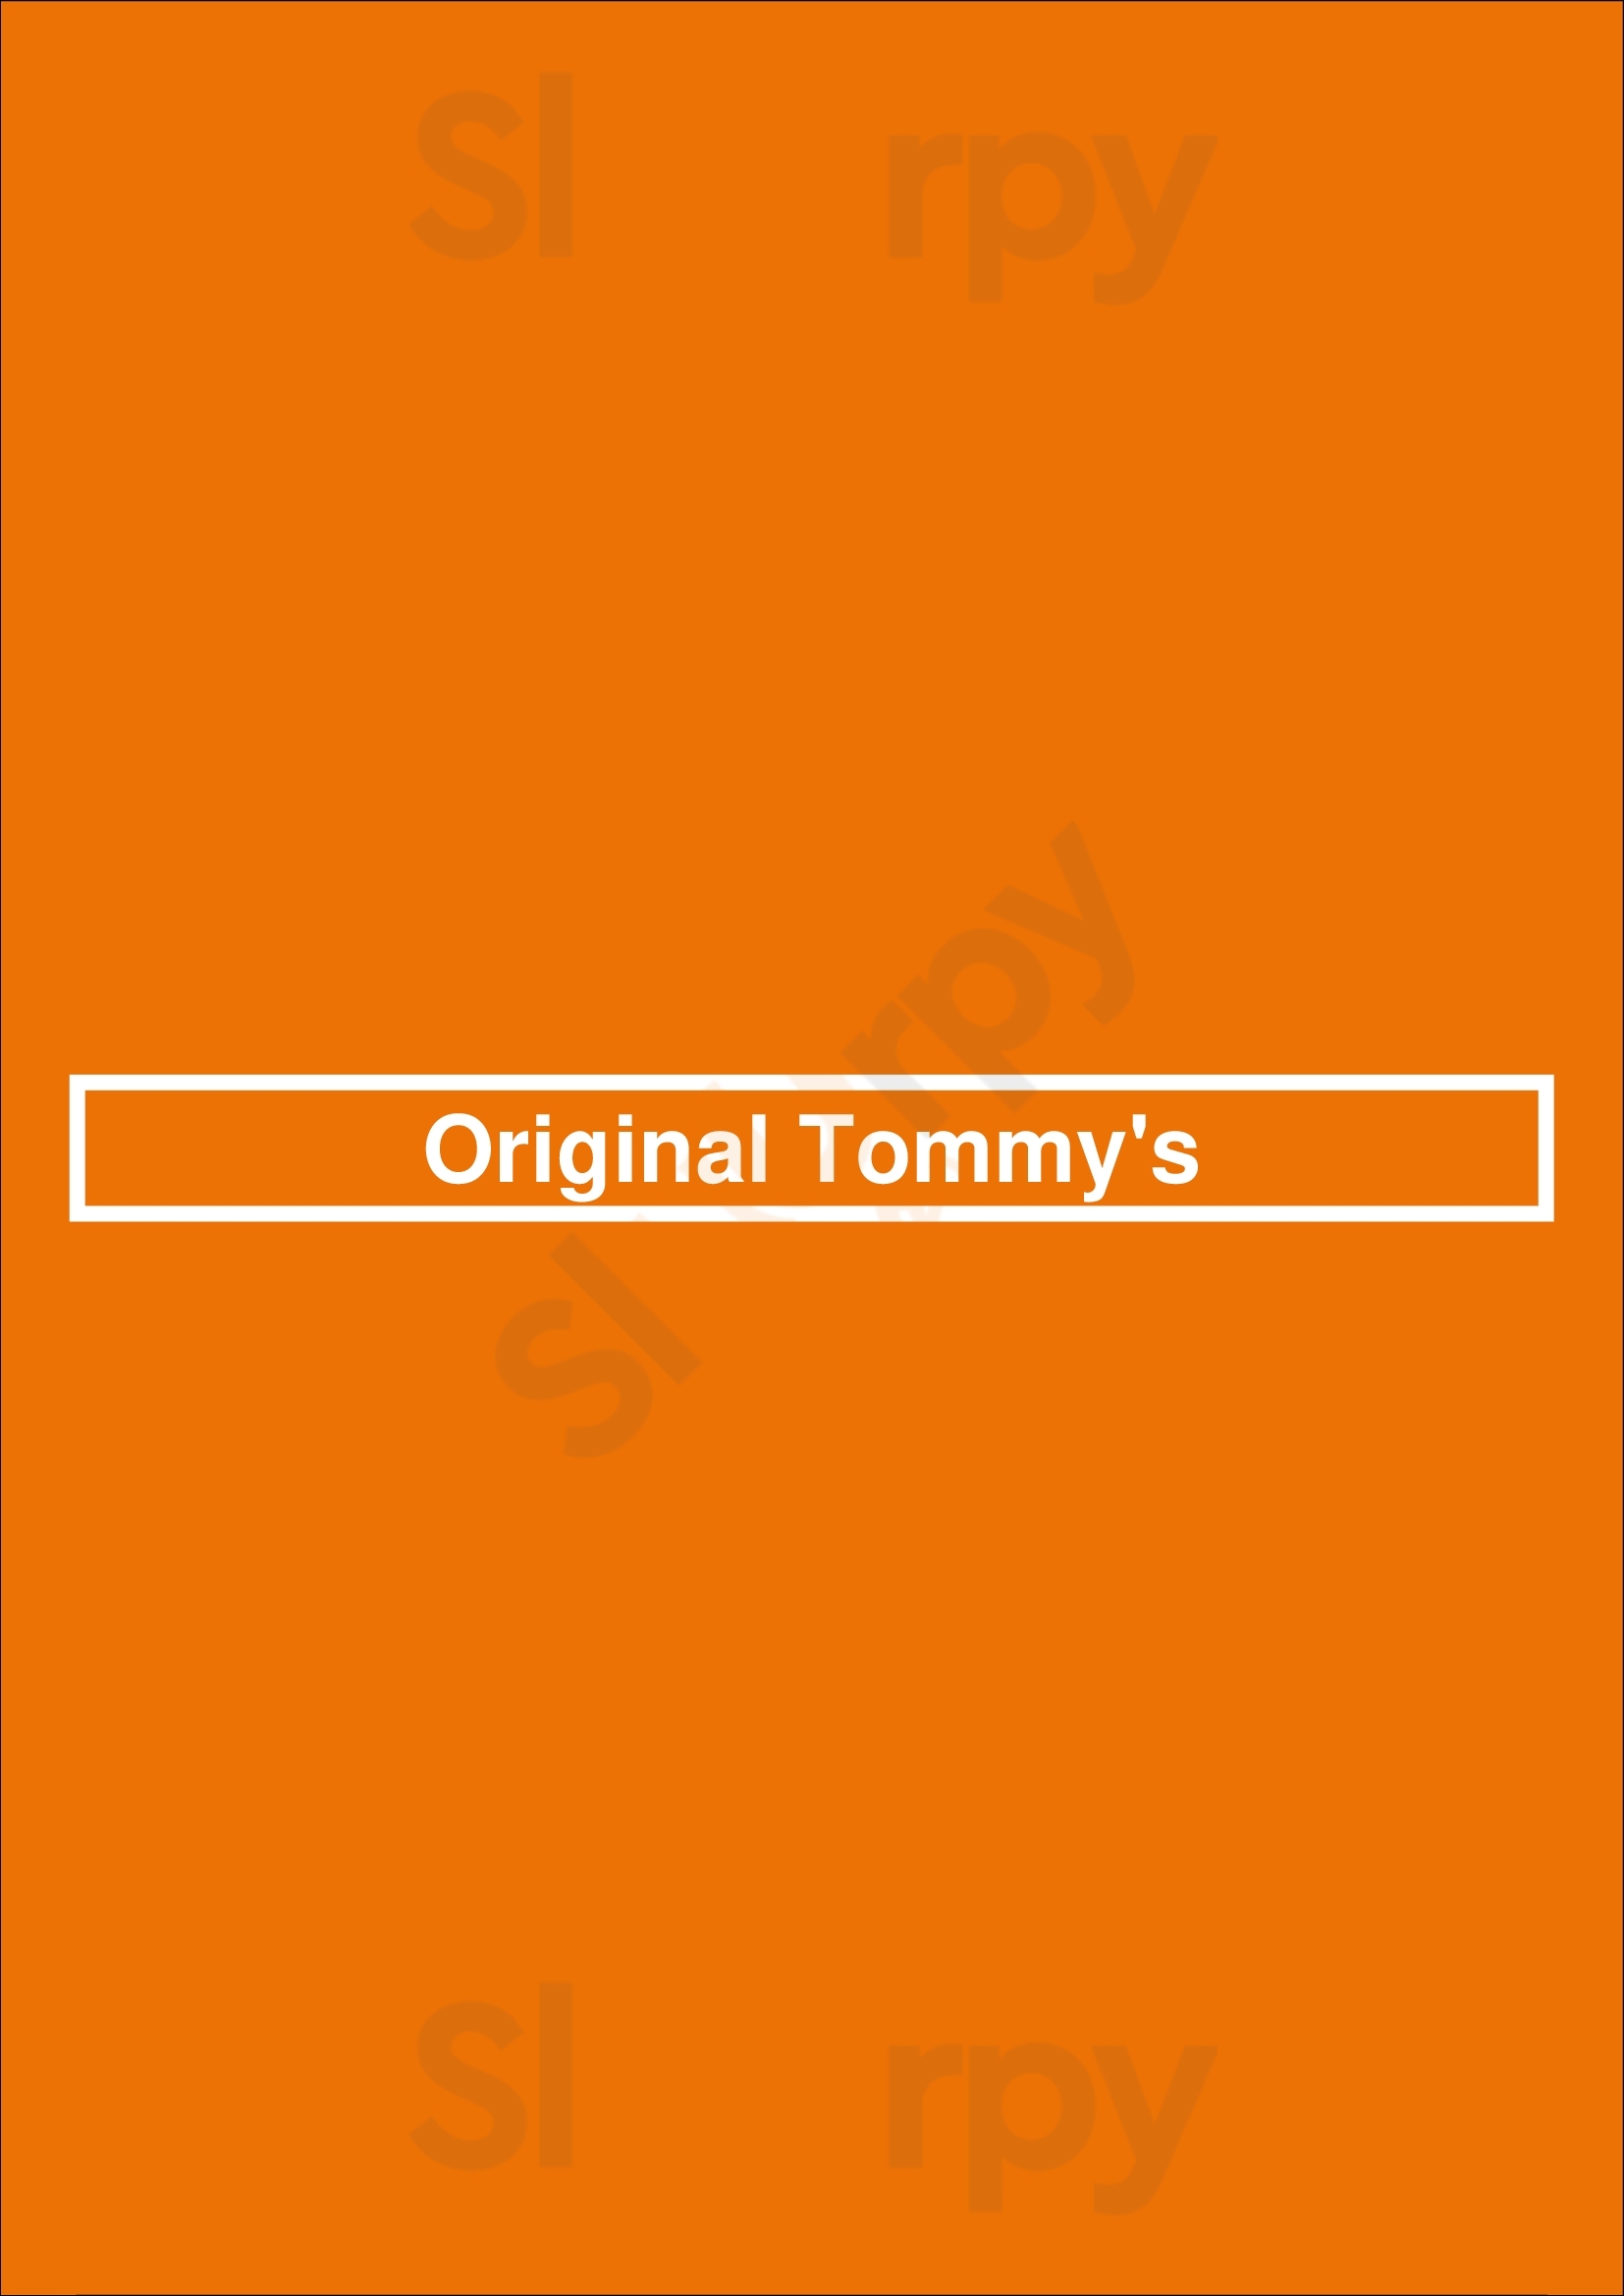 Original Tommy's Los Angeles Menu - 1